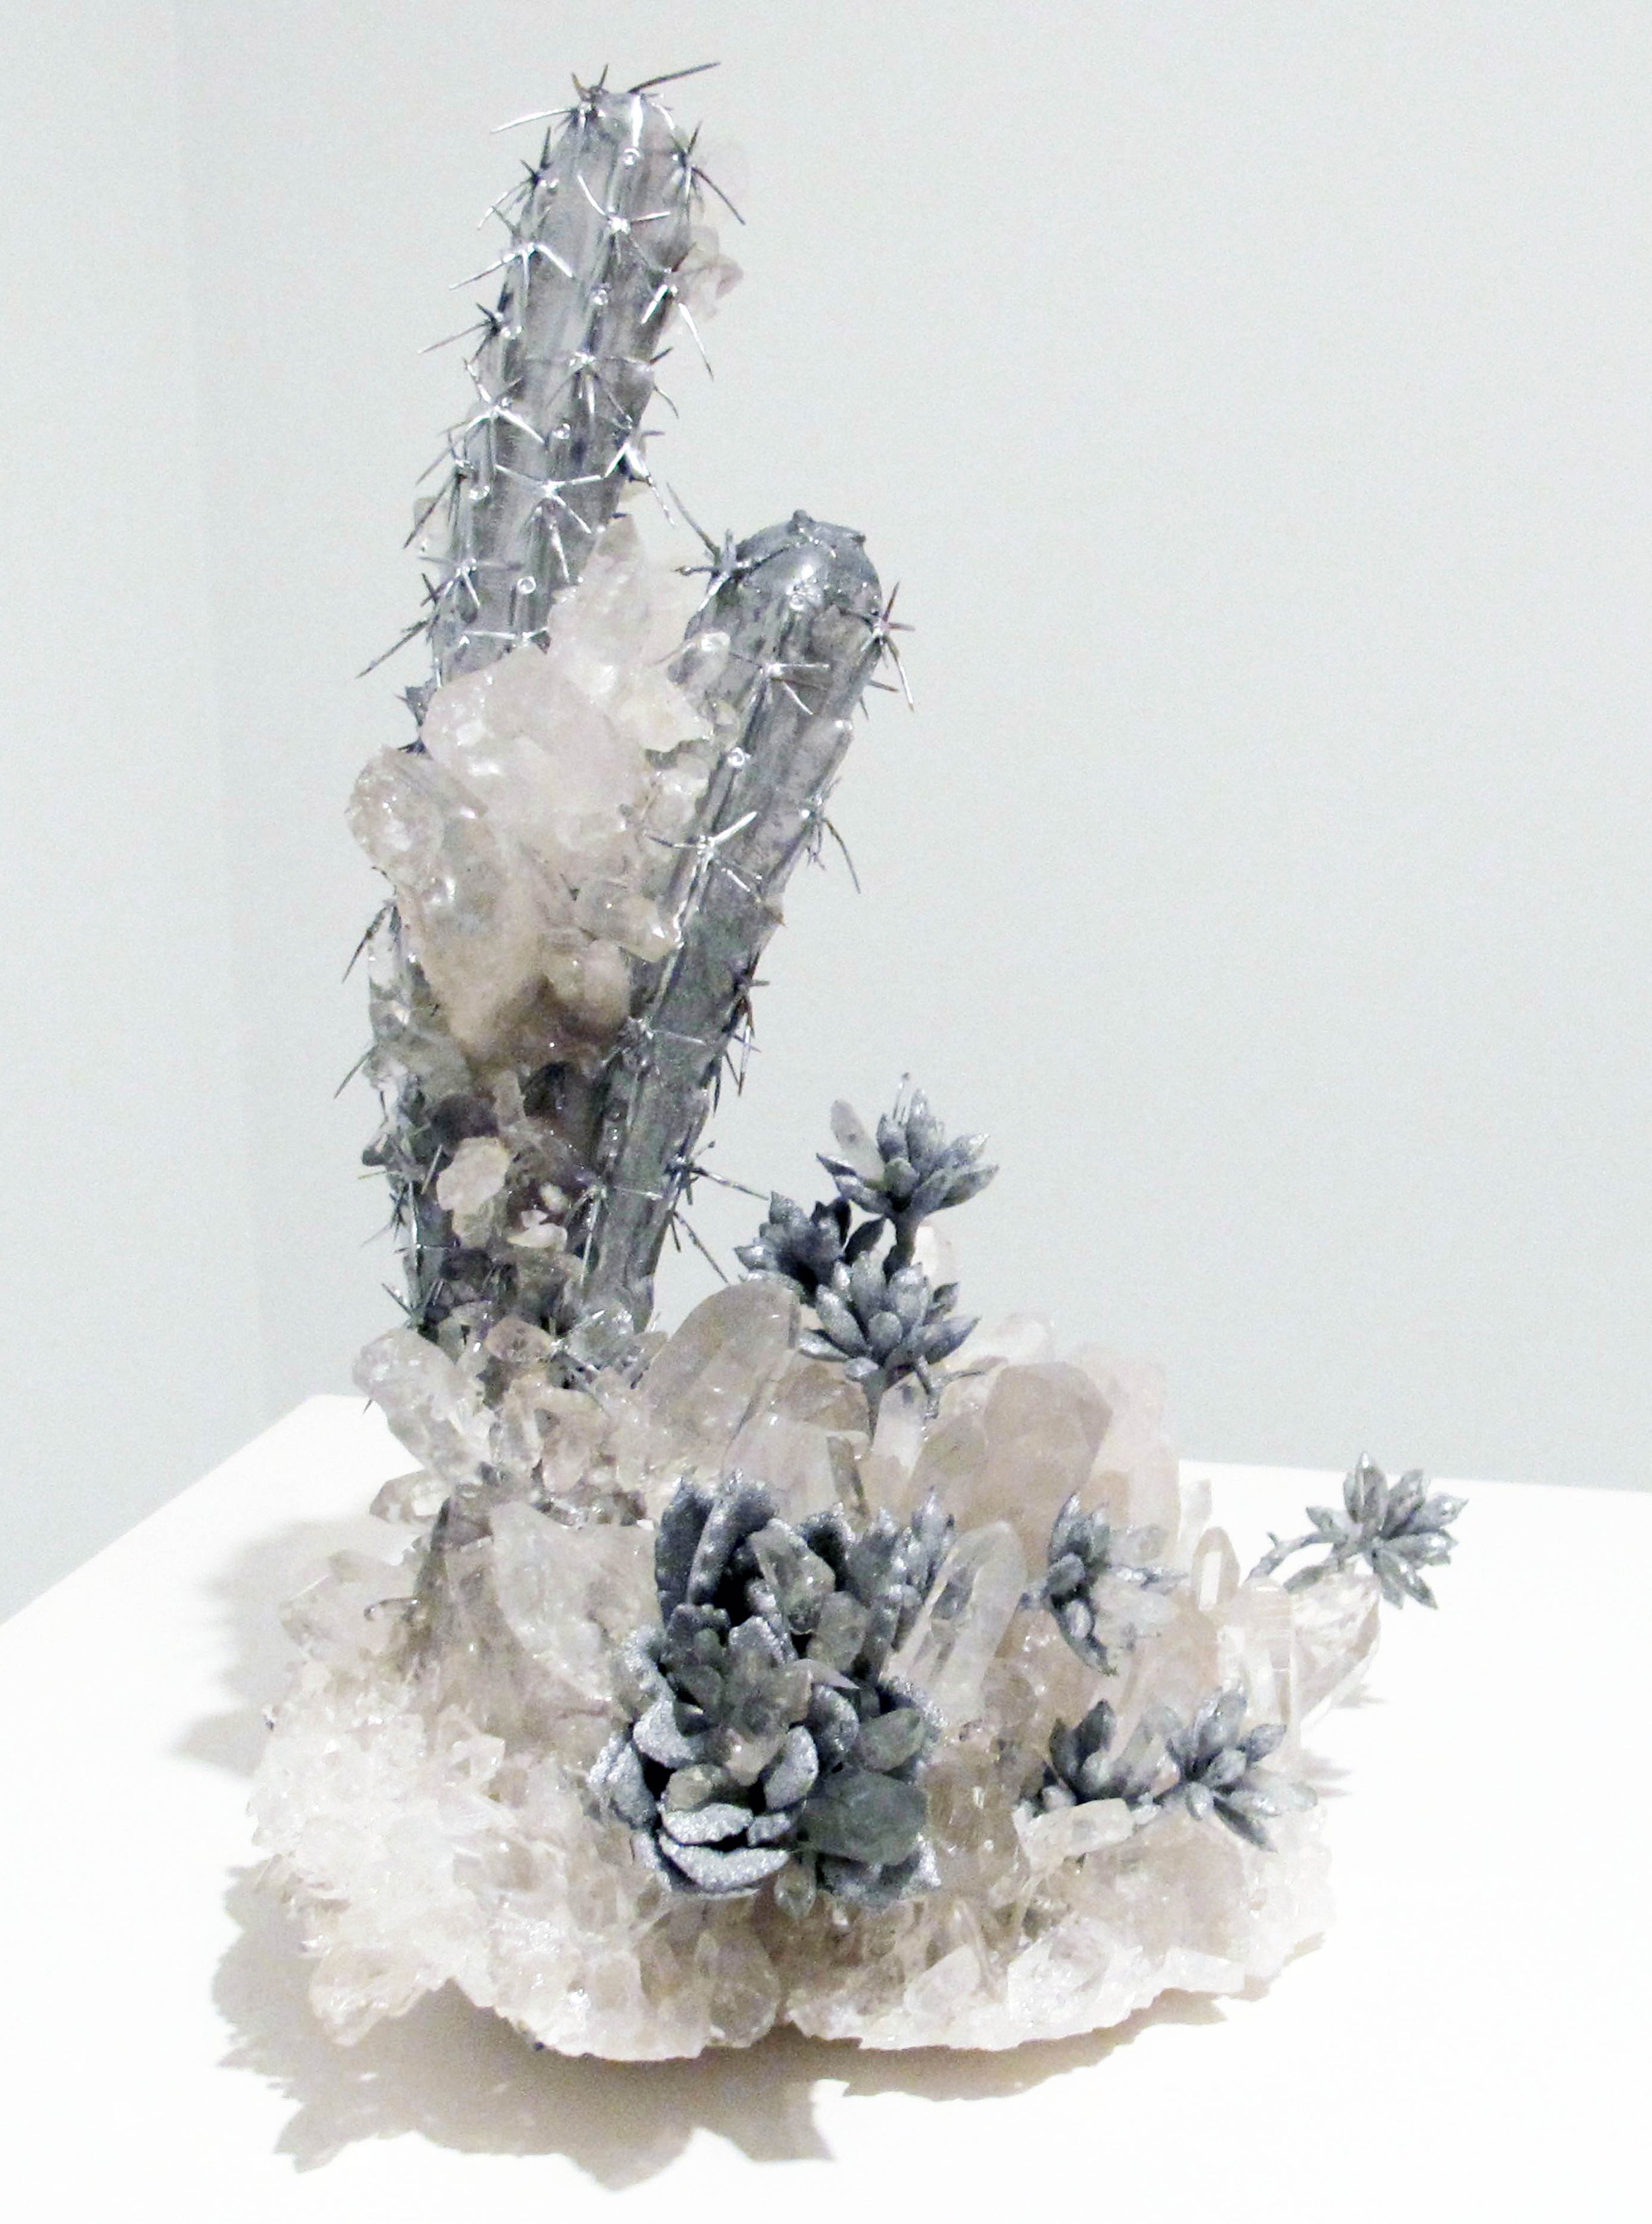 Untitled (Cactus Crystal) #2